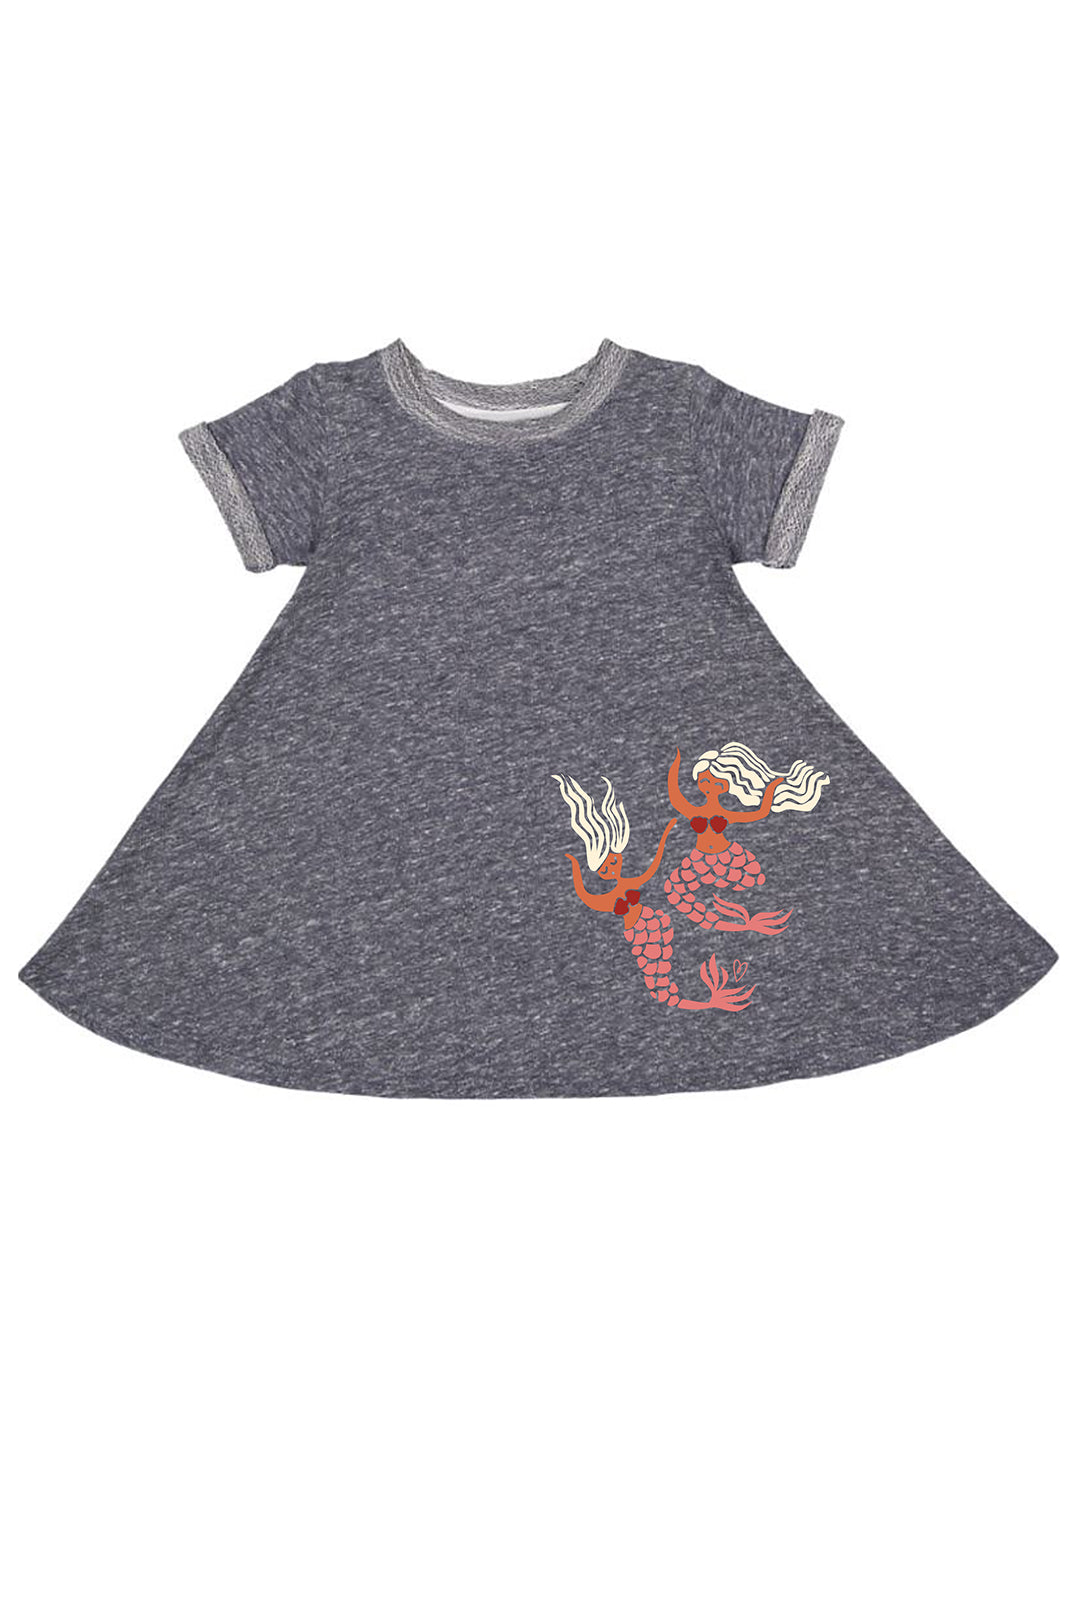 Latched Mama Toddler Mermaids Twirl Dress - Final Sale